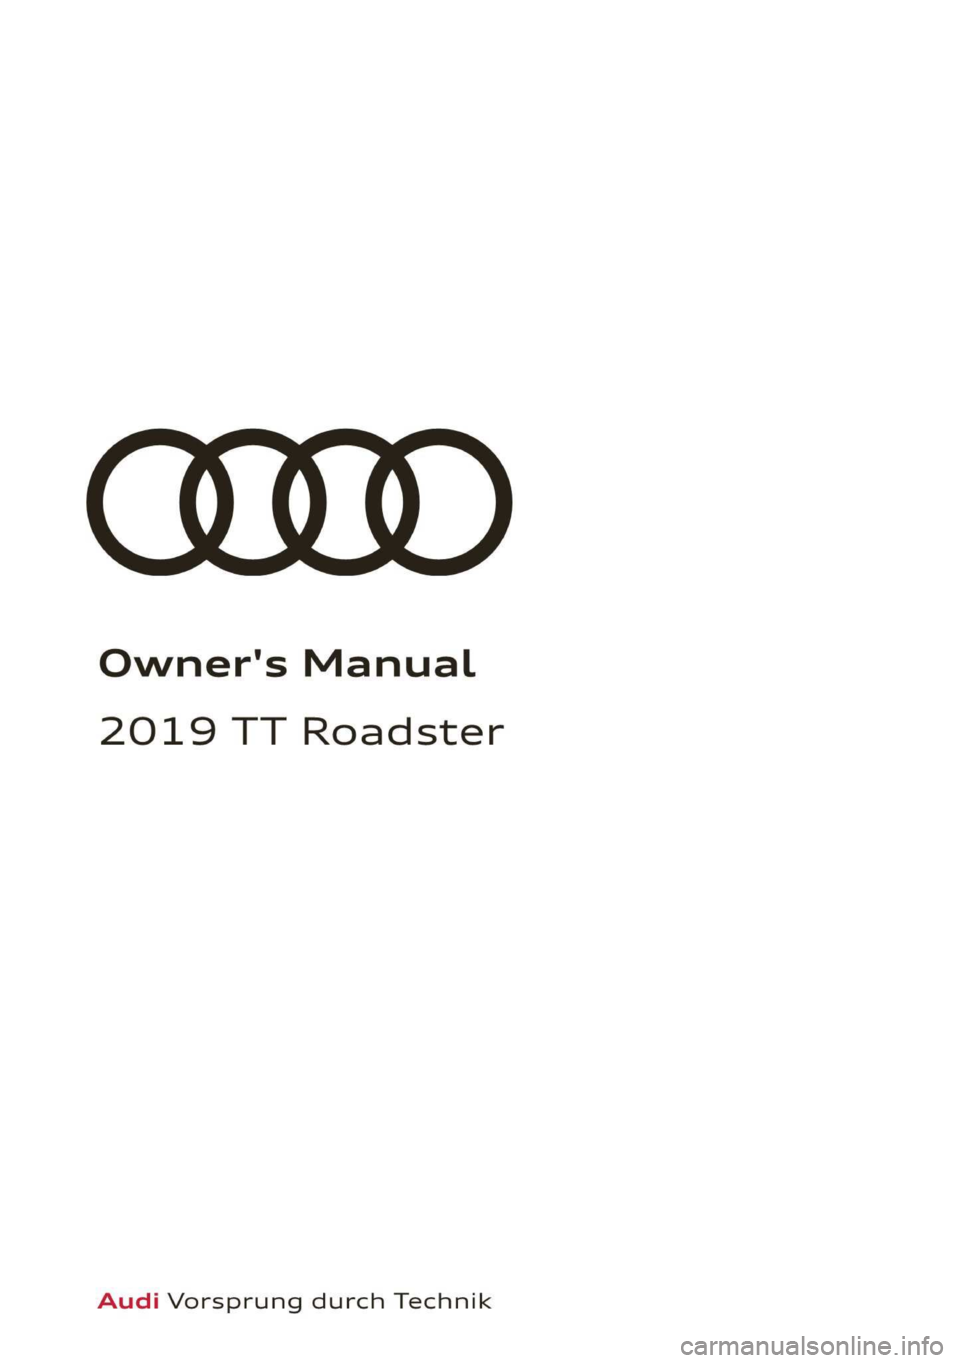 AUDI TT ROADSTER 2019  Owners Manual Owner's Manual 
2019 TT Roadster 
Audi Vorsprung durch Technik  